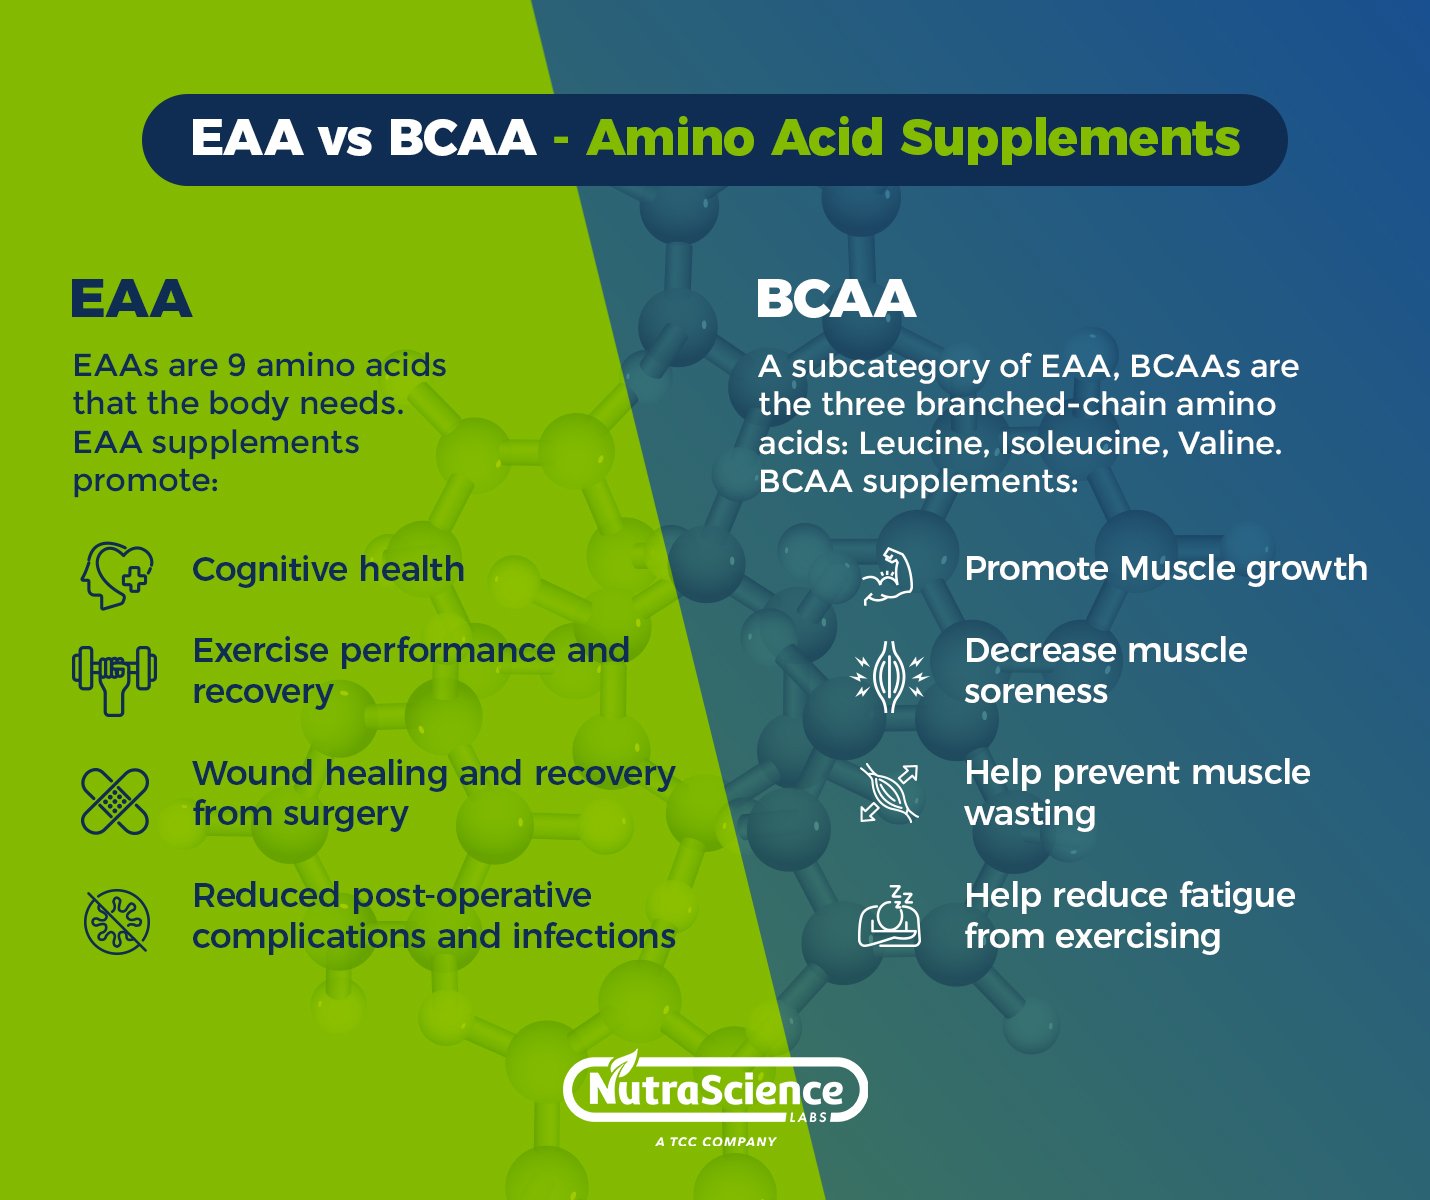 EAA vs BCAA - Amino Acid Supplements - Infographic 